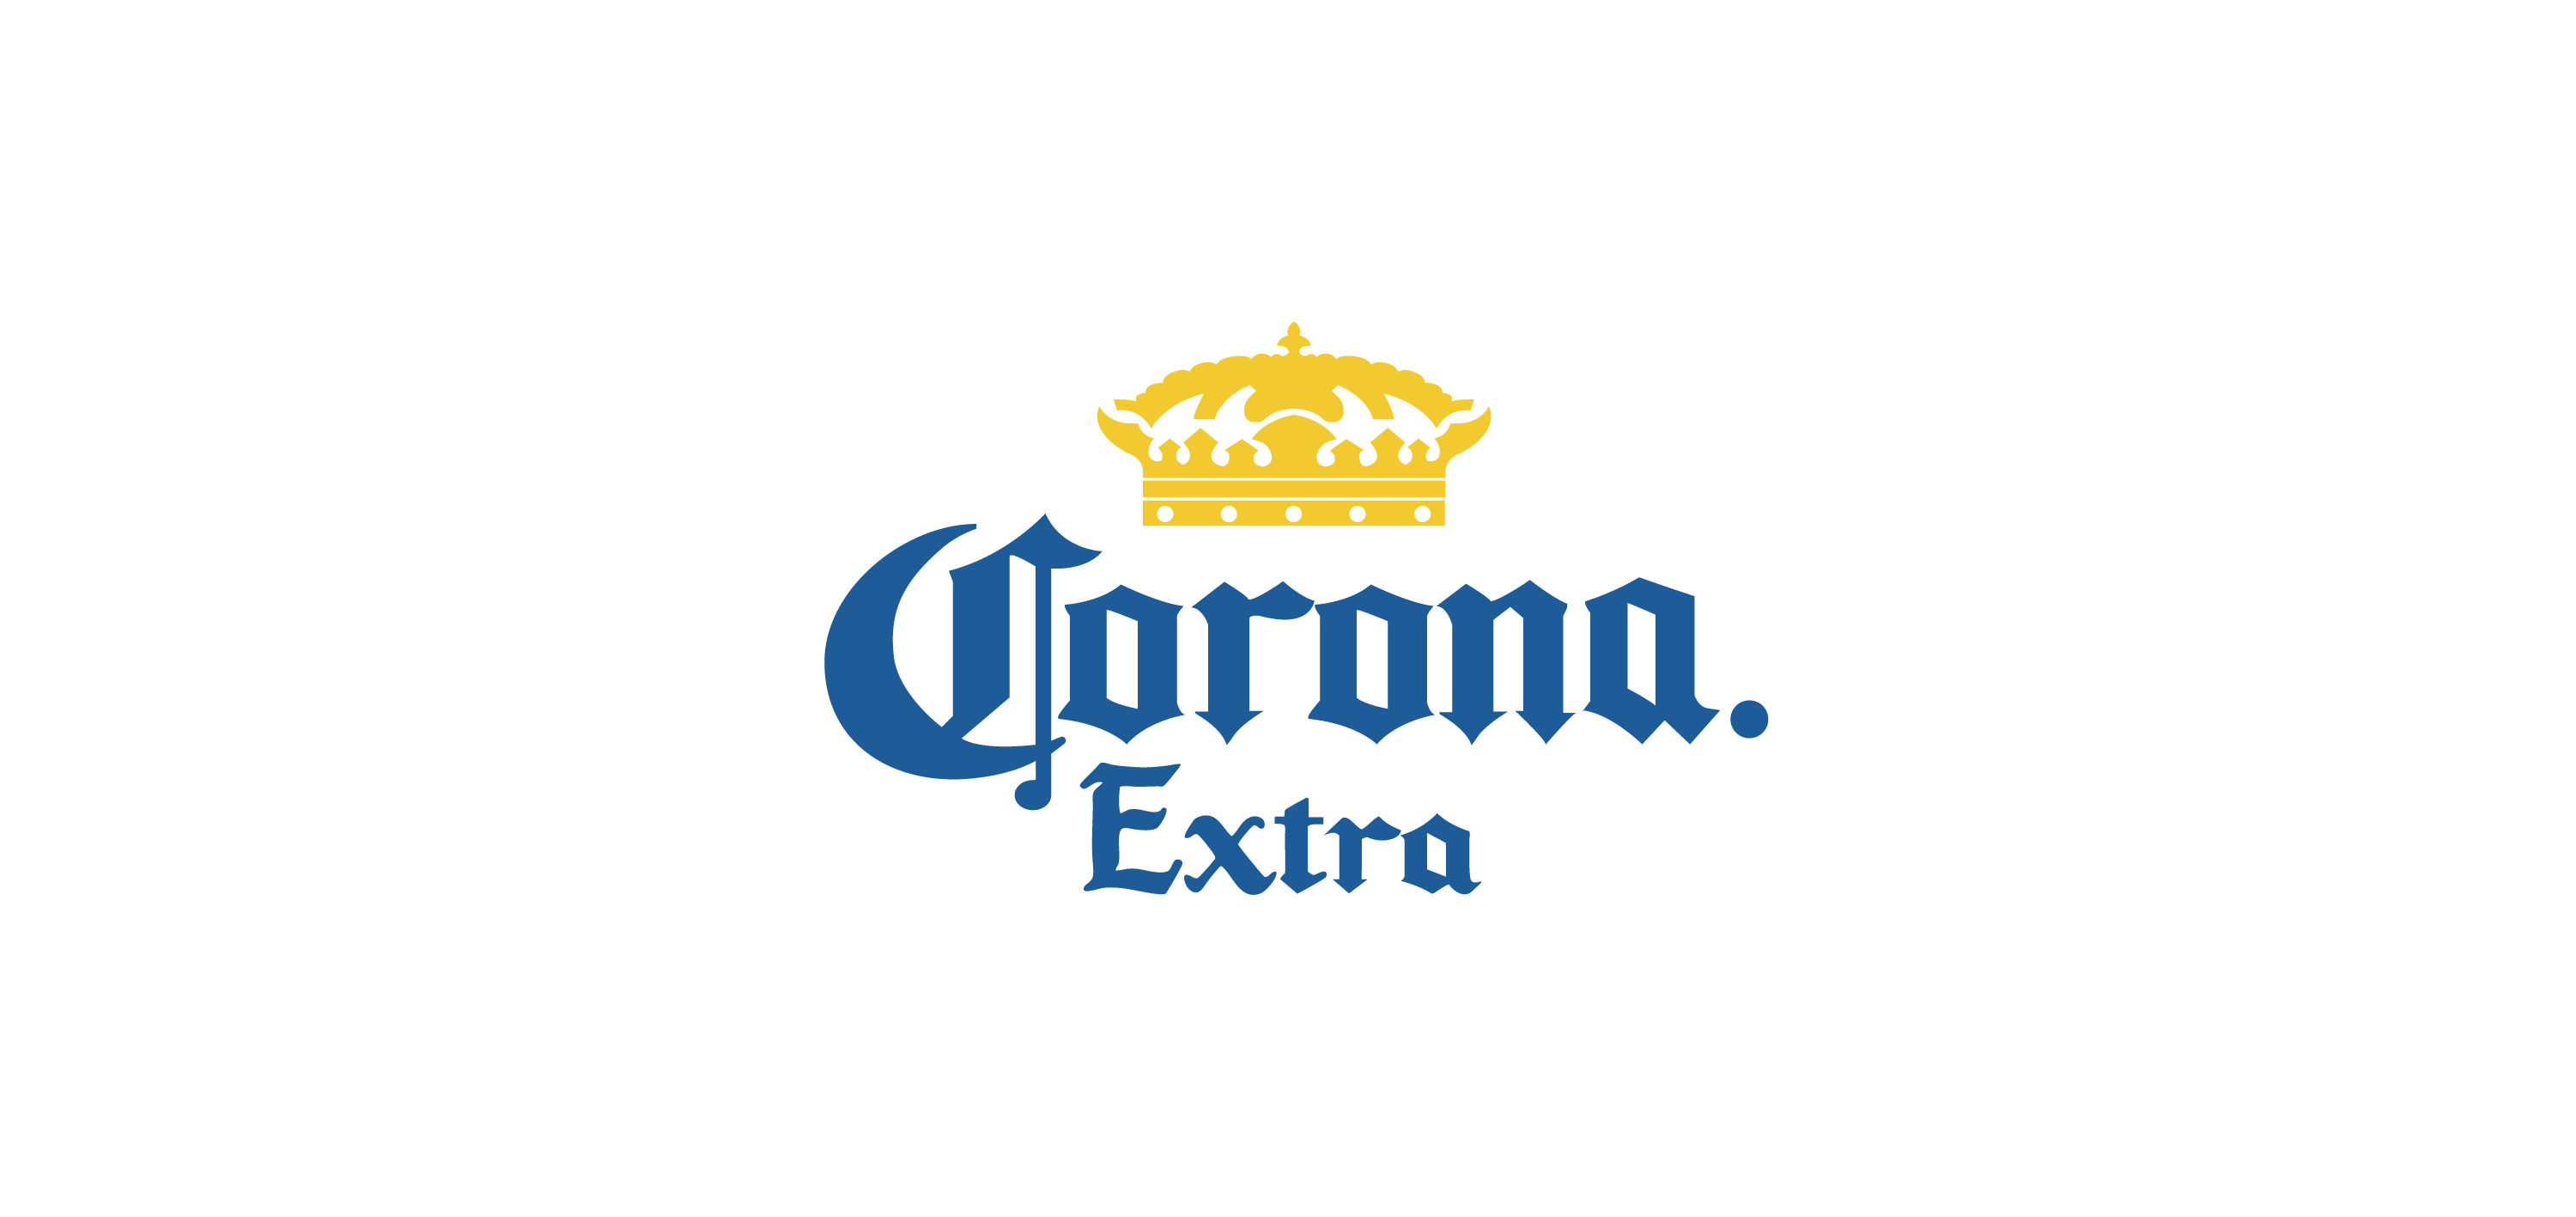 corona extra logo vector